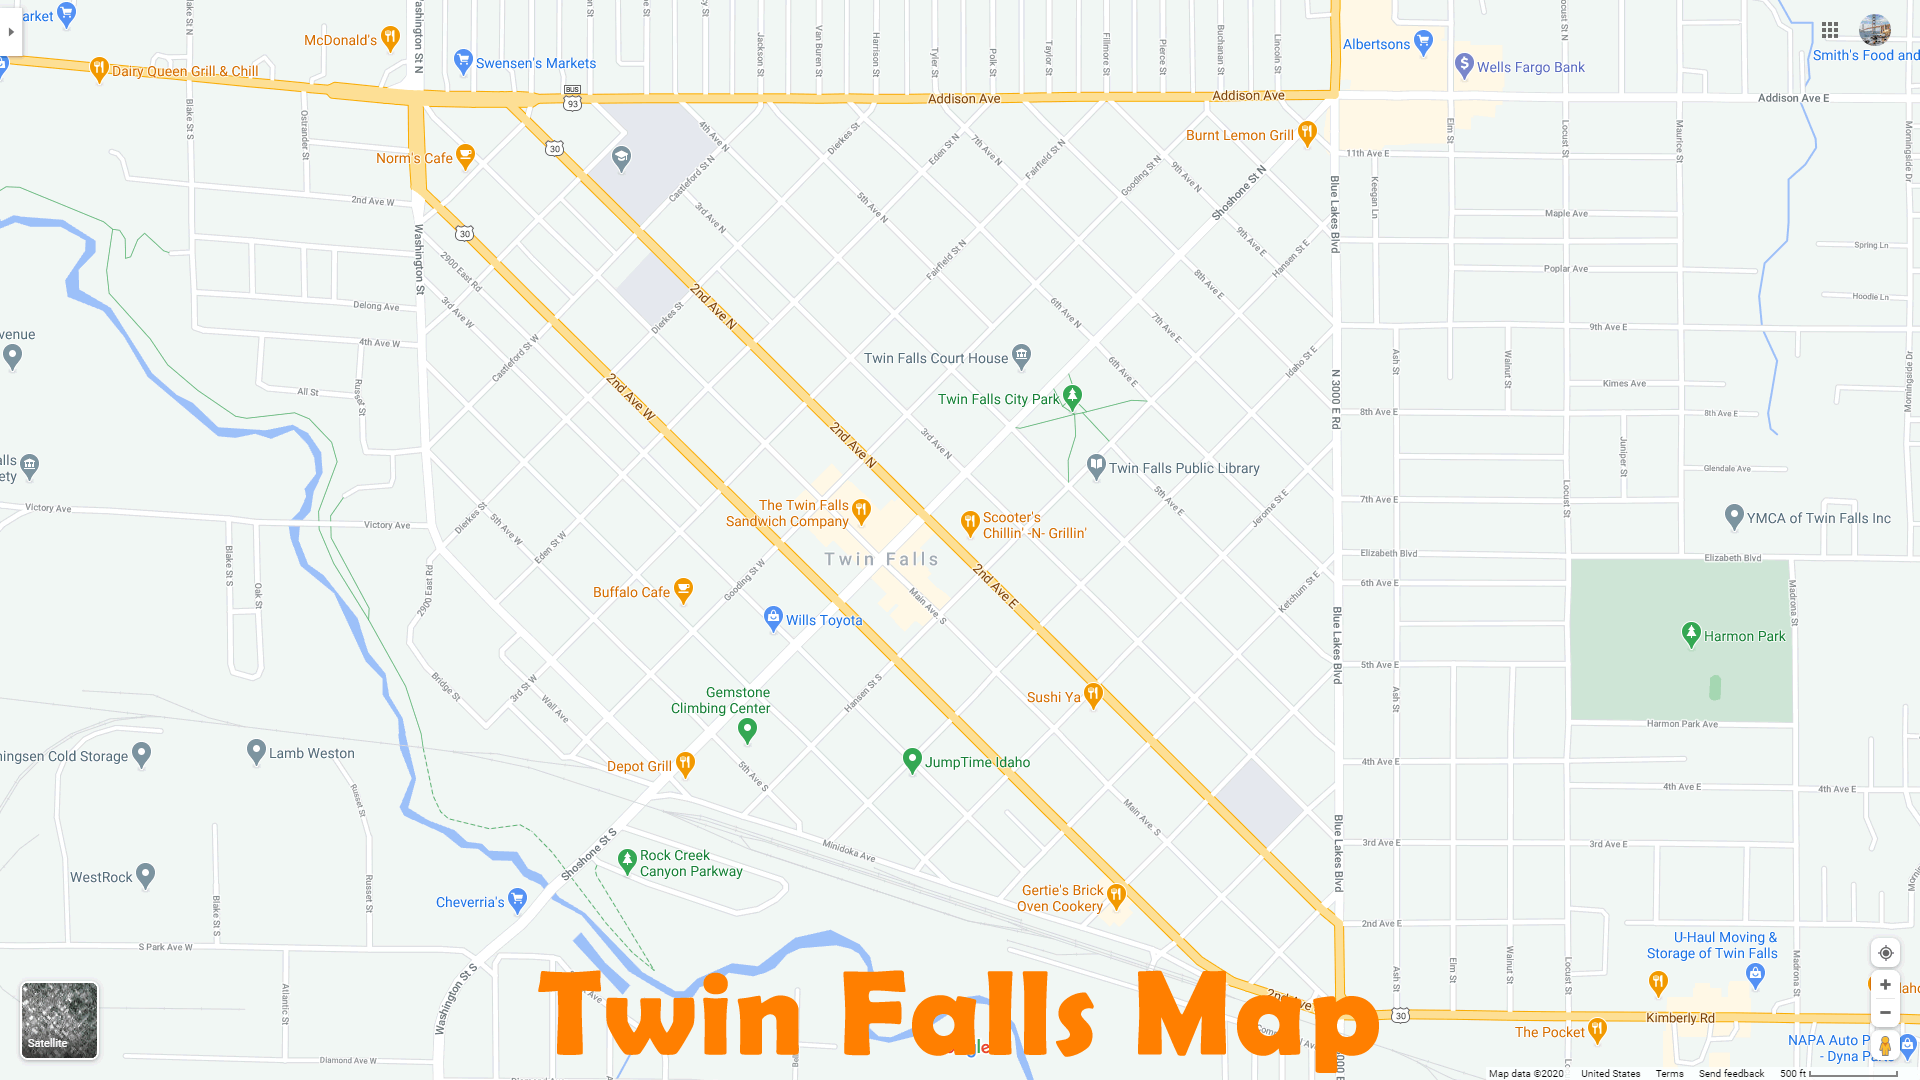 Twin Falls plan